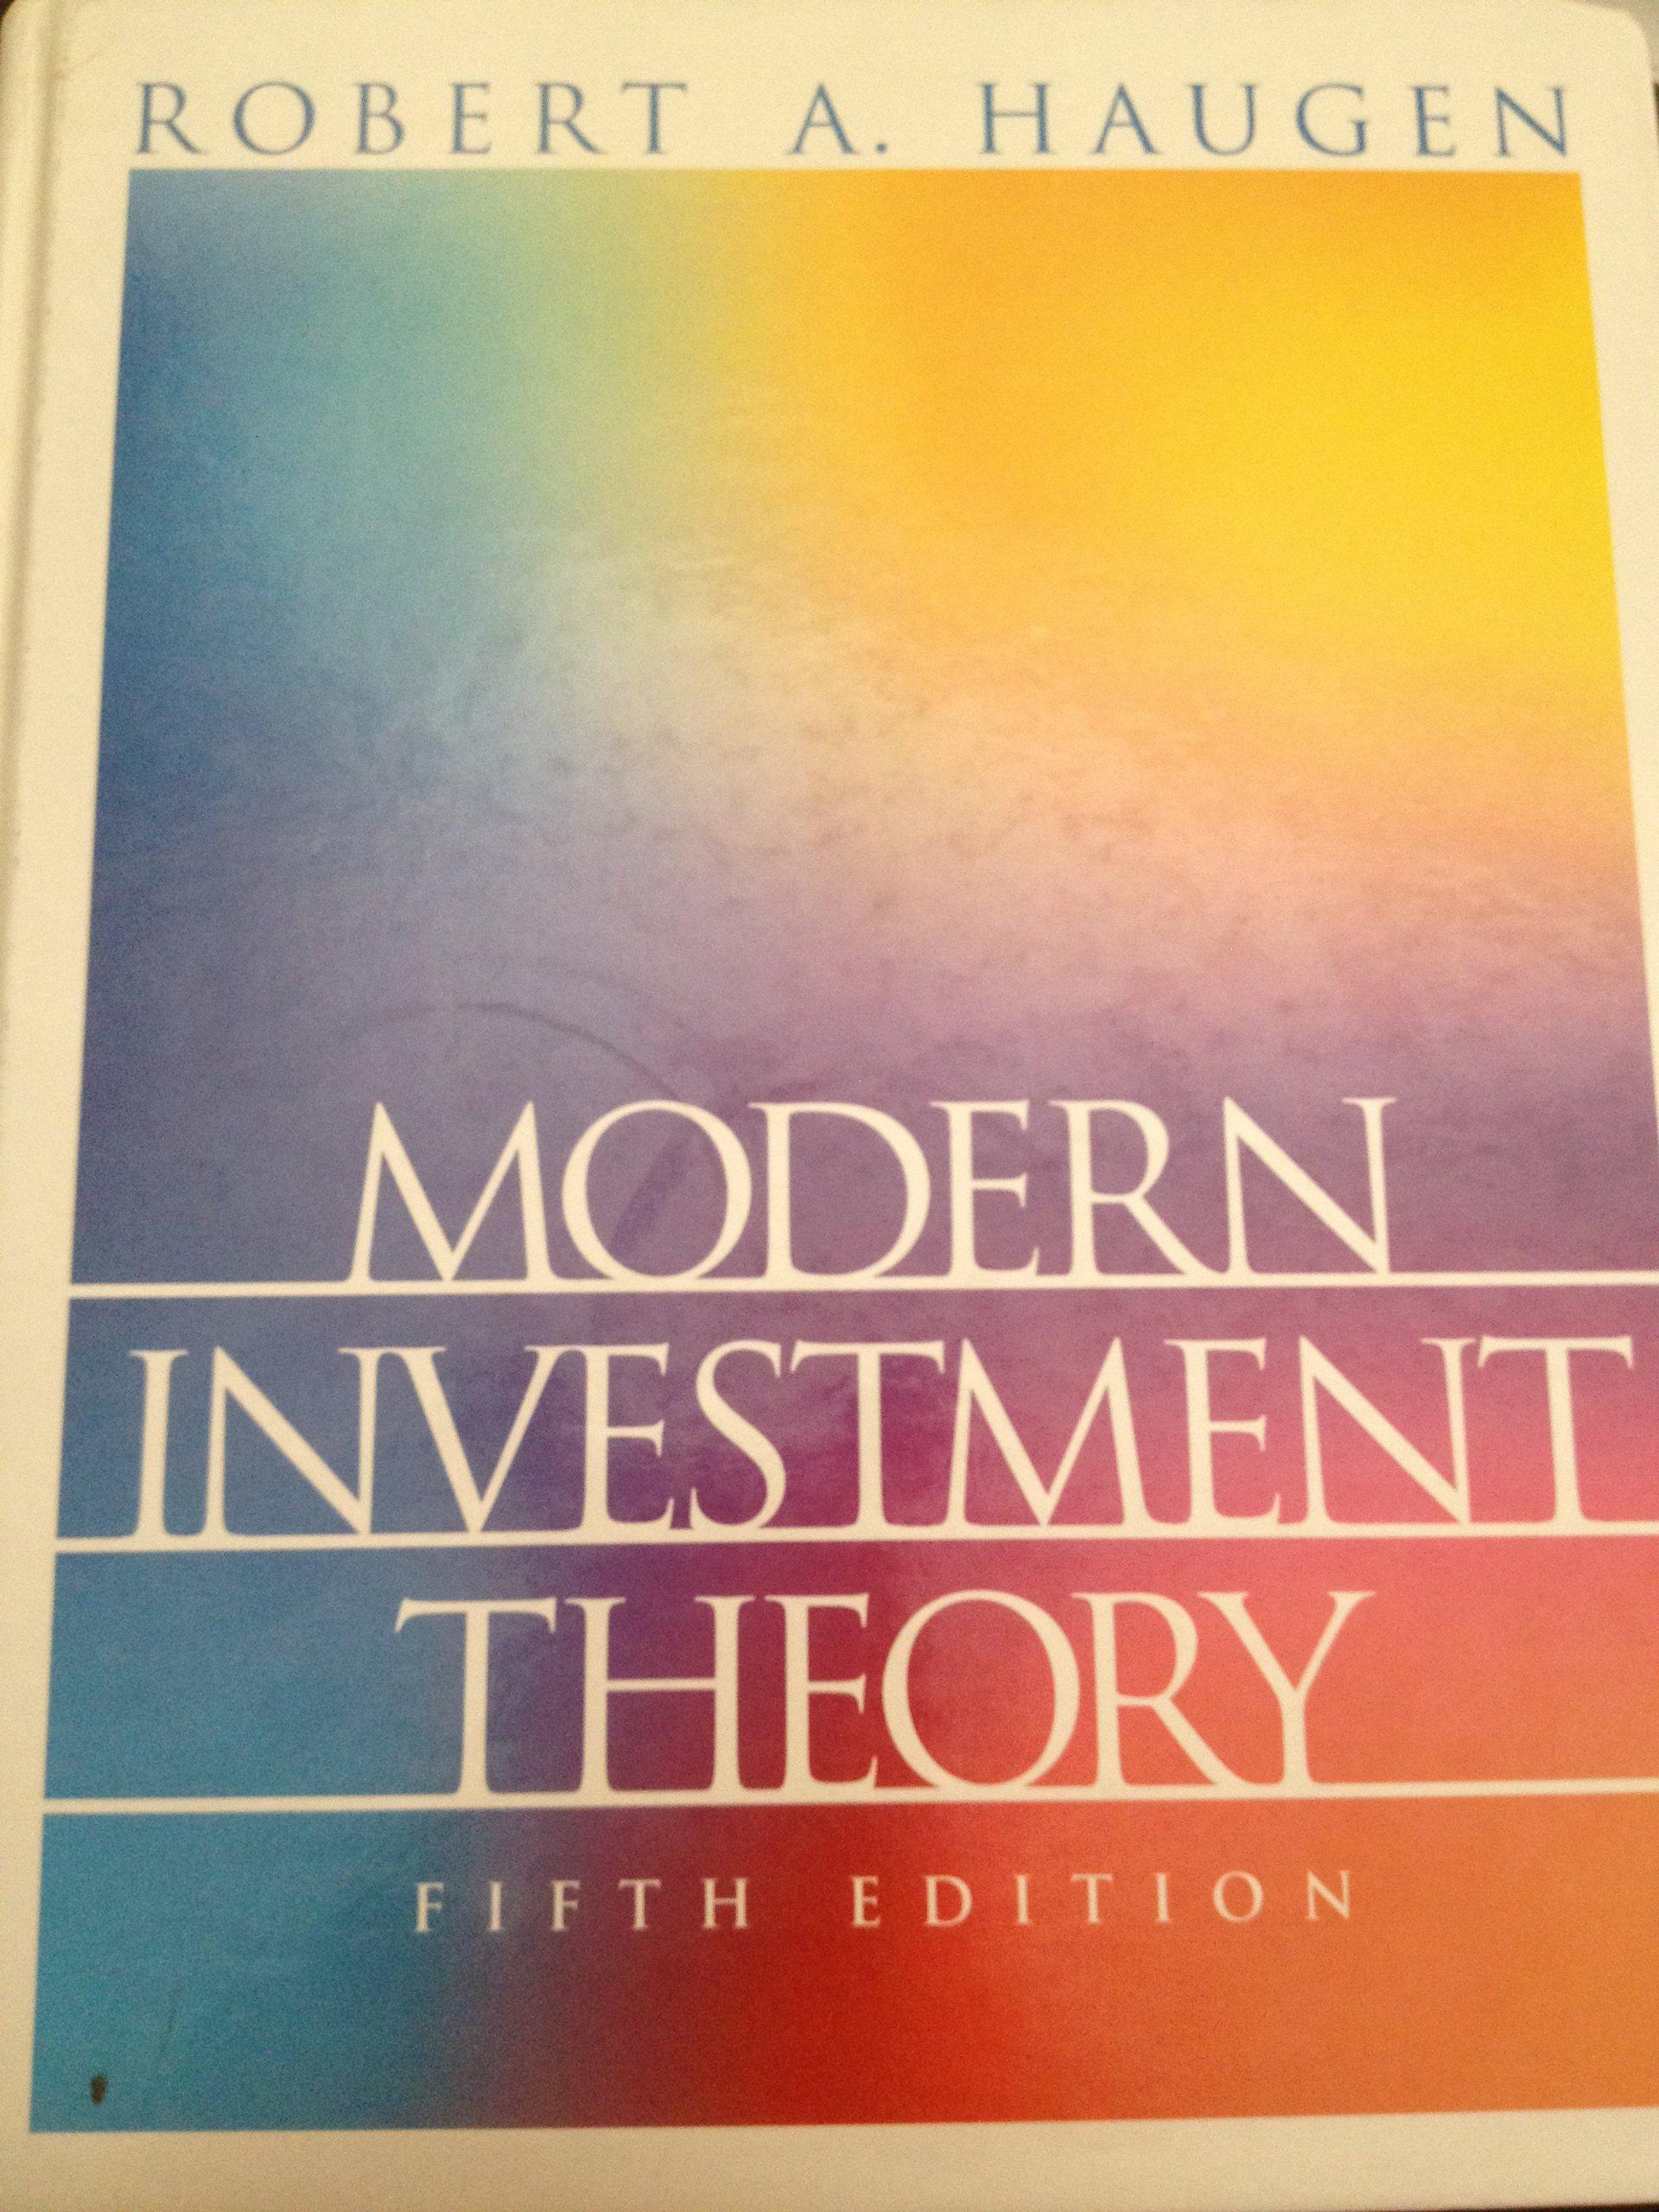 modern investment theory 5th edition robert a. haugen 0130191701, 978-0130191700